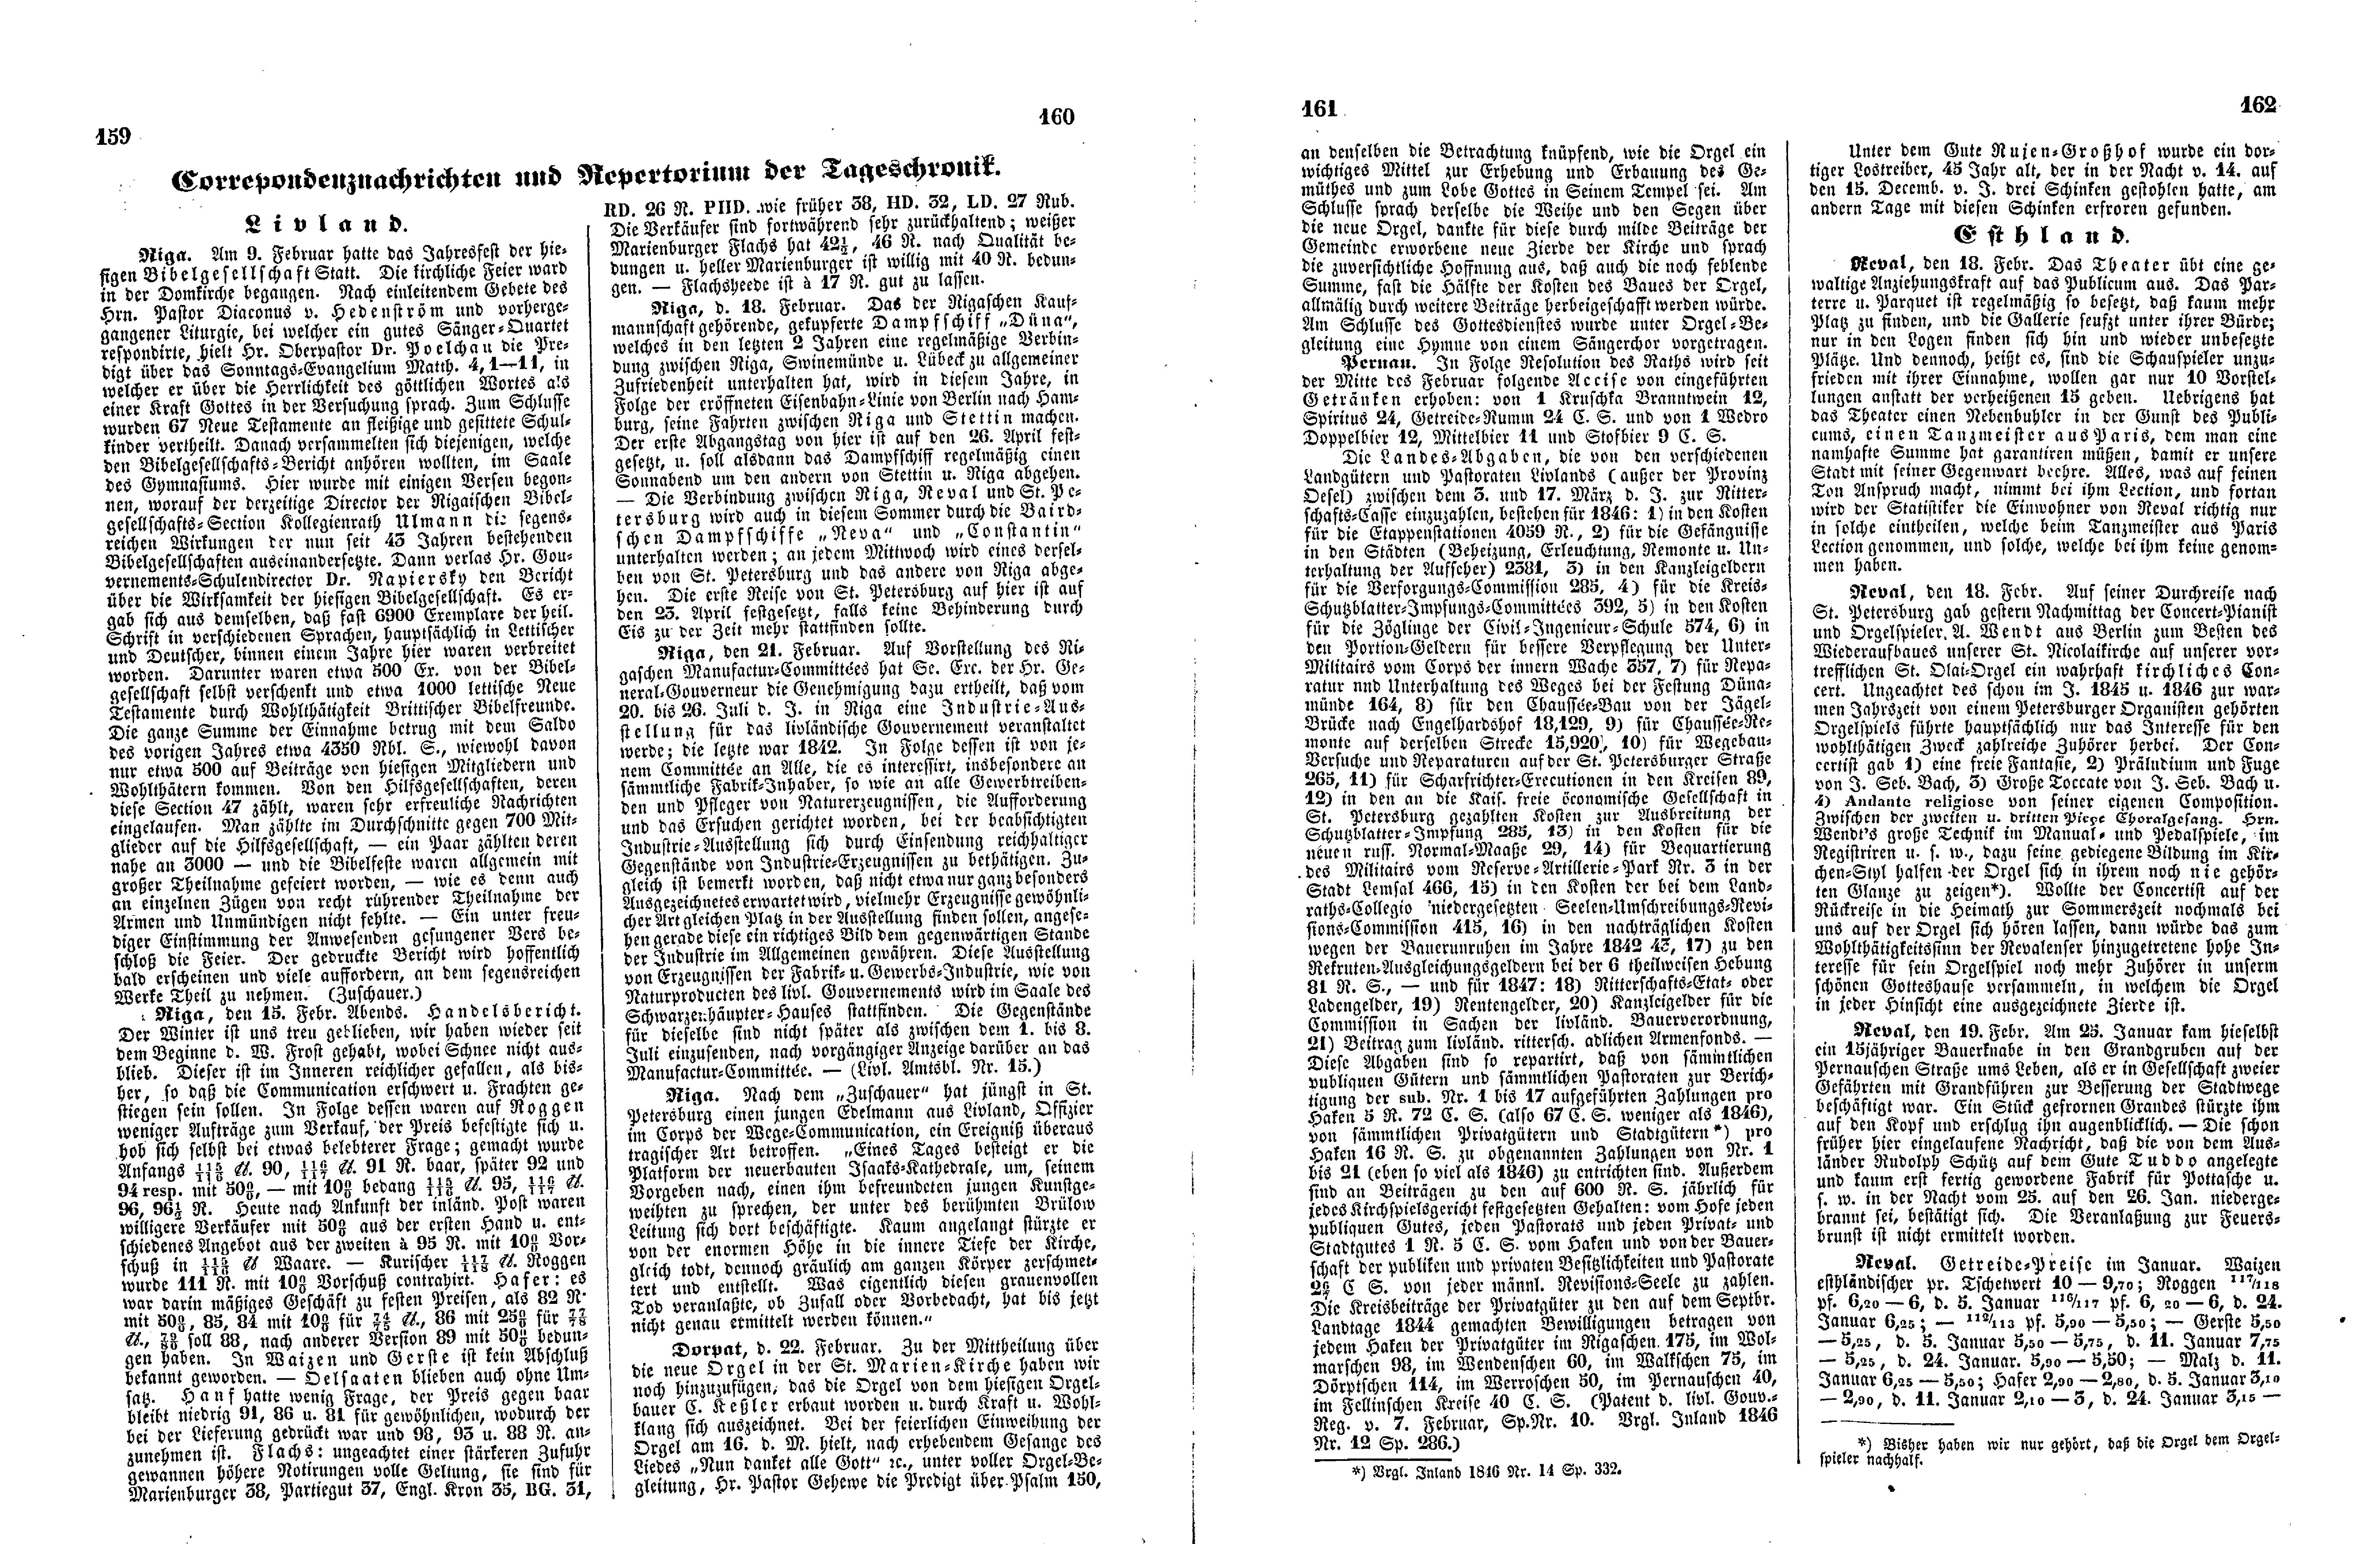 Das Inland [12] (1847) | 45. (159-162) Main body of text